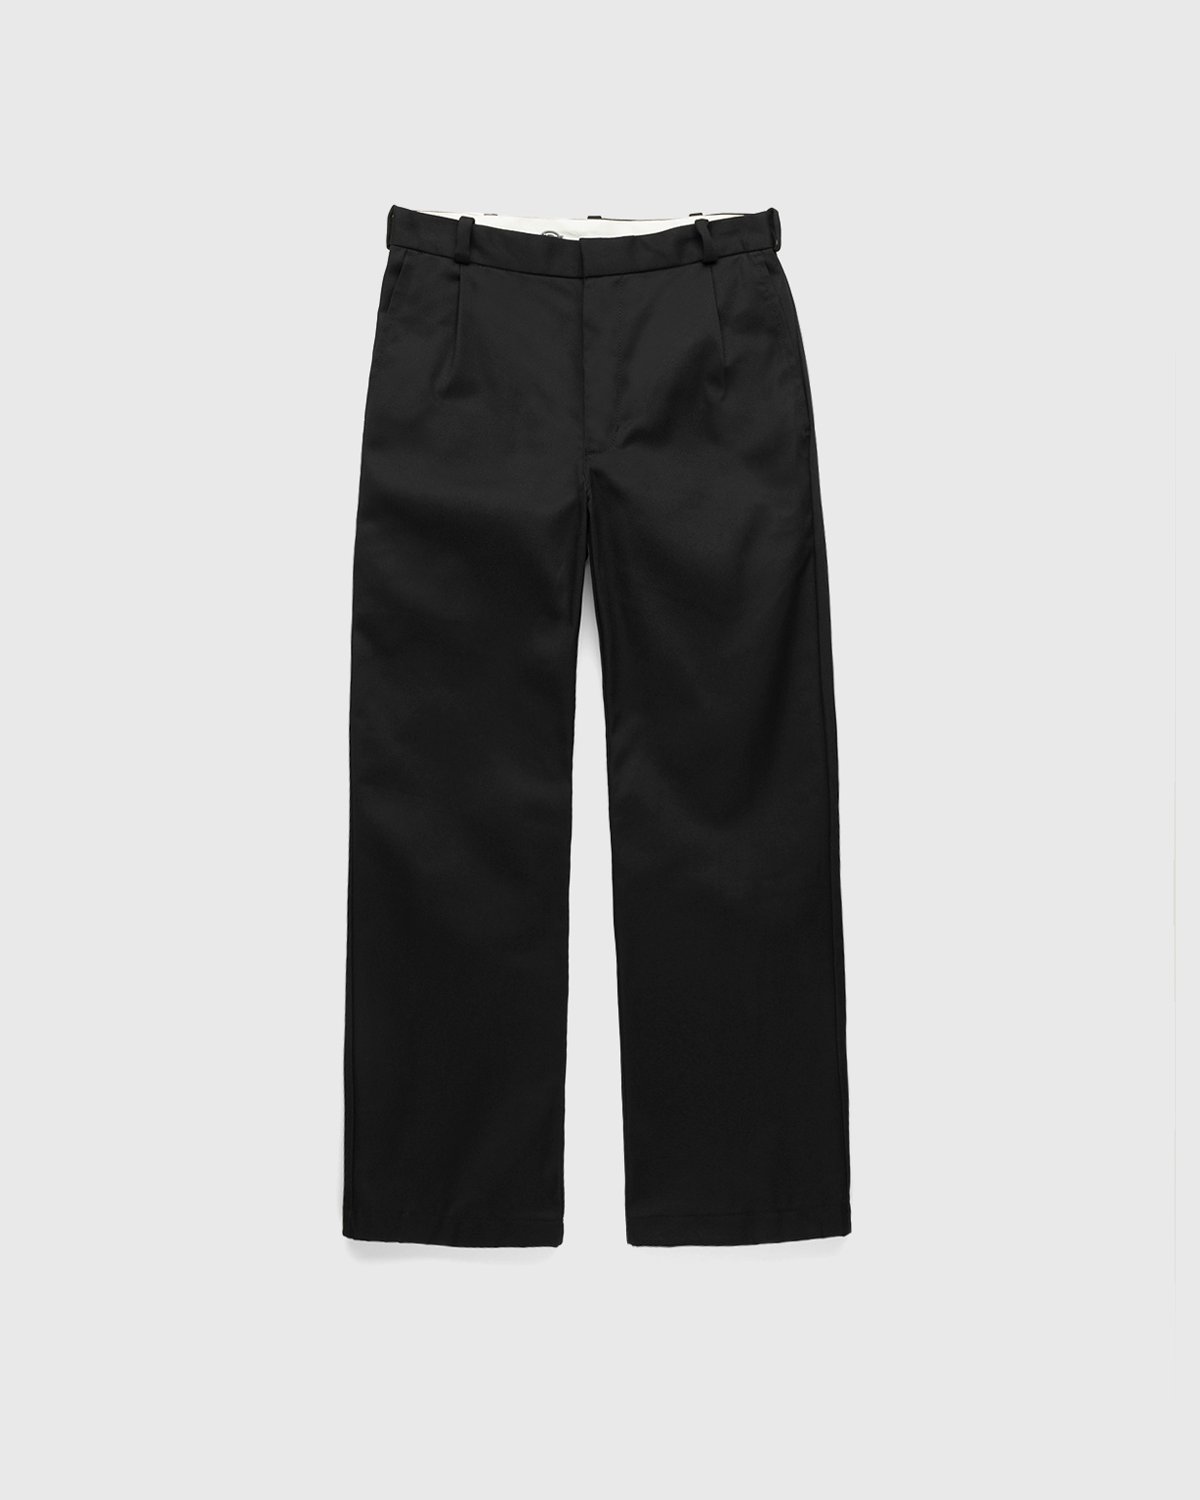 Highsnobiety x Dickies - Pleated Work Pants Black - Clothing - Black - Image 1